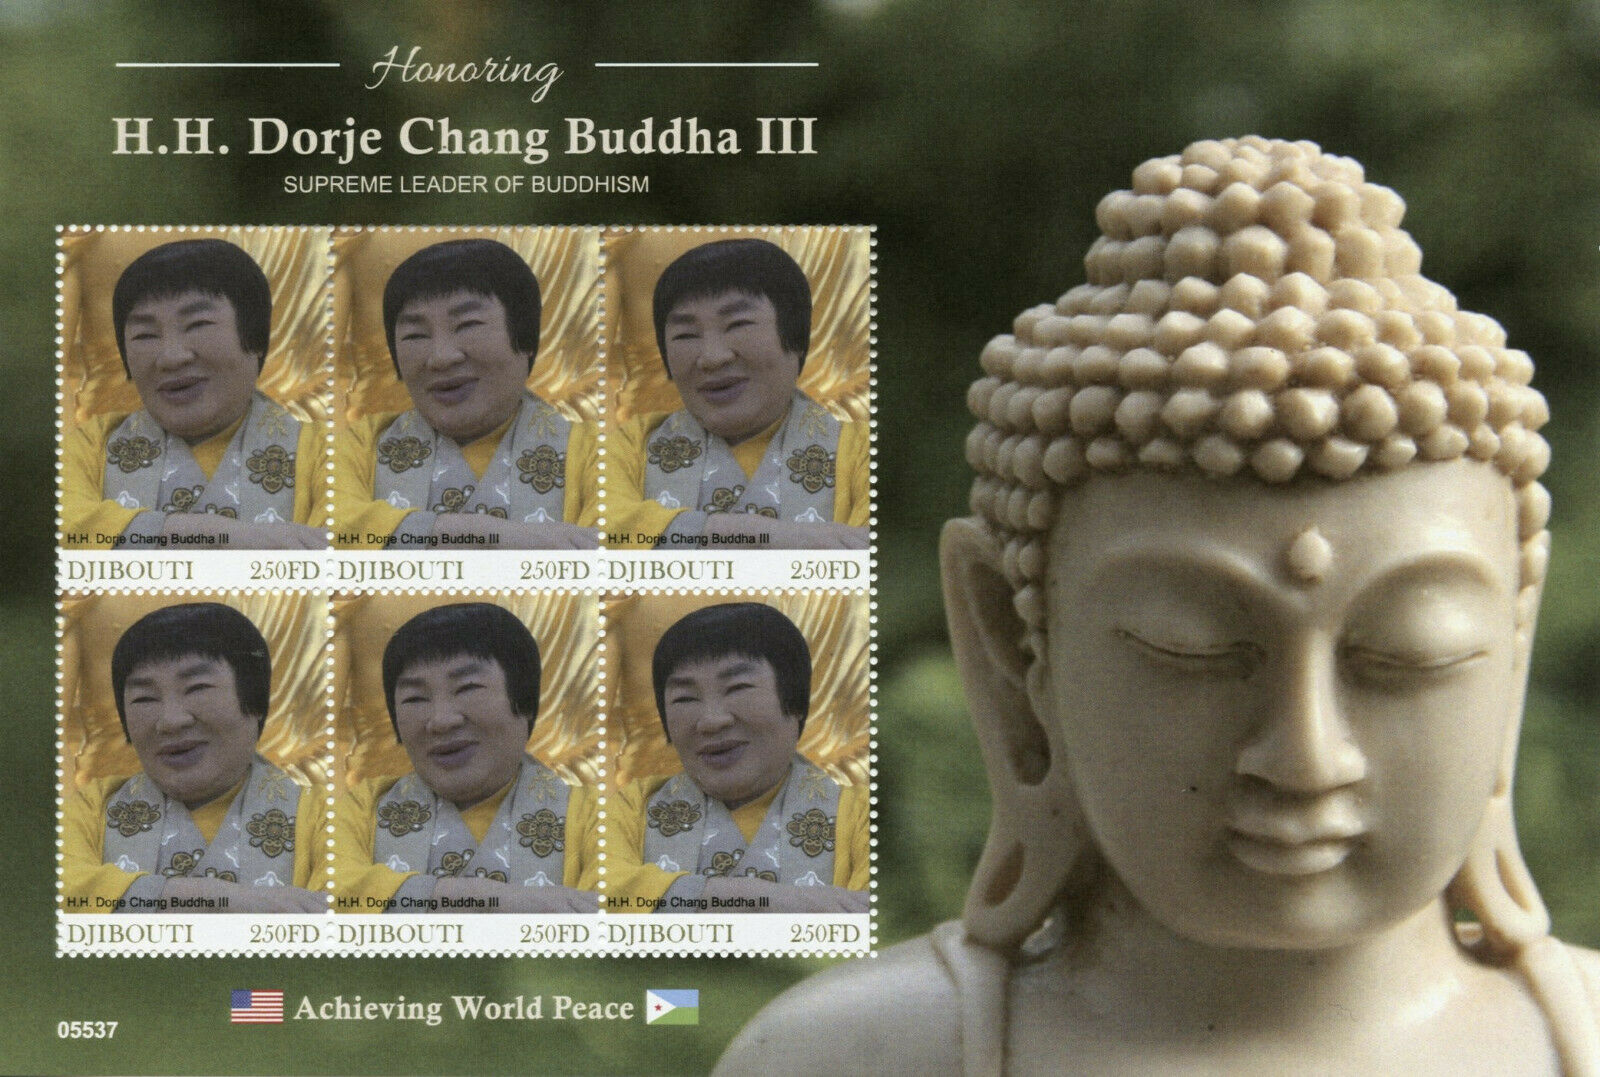 Djibouti 2020 MNH Famous People Stamps HH Dorje Chang Buddha III Buddhism 6v M/S